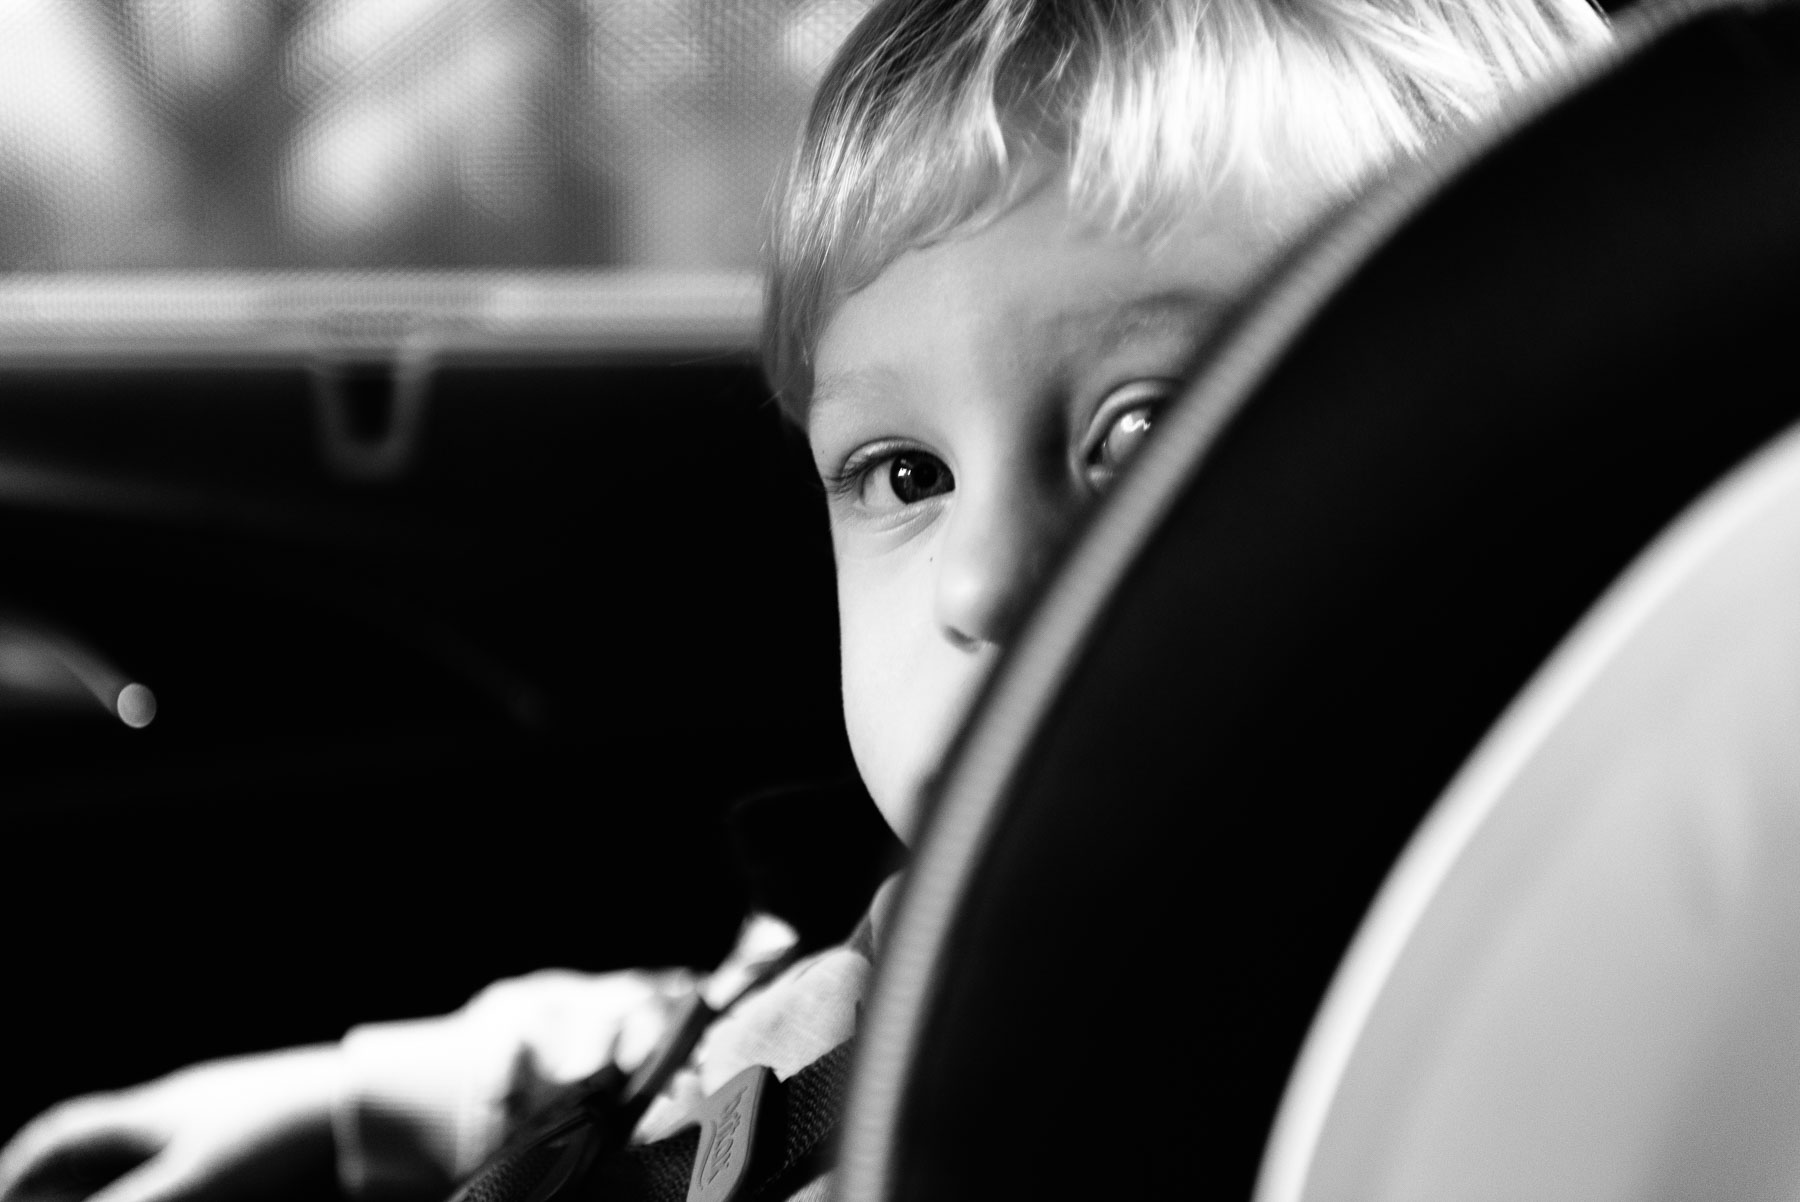 Toddler boy peeking over side of carseat